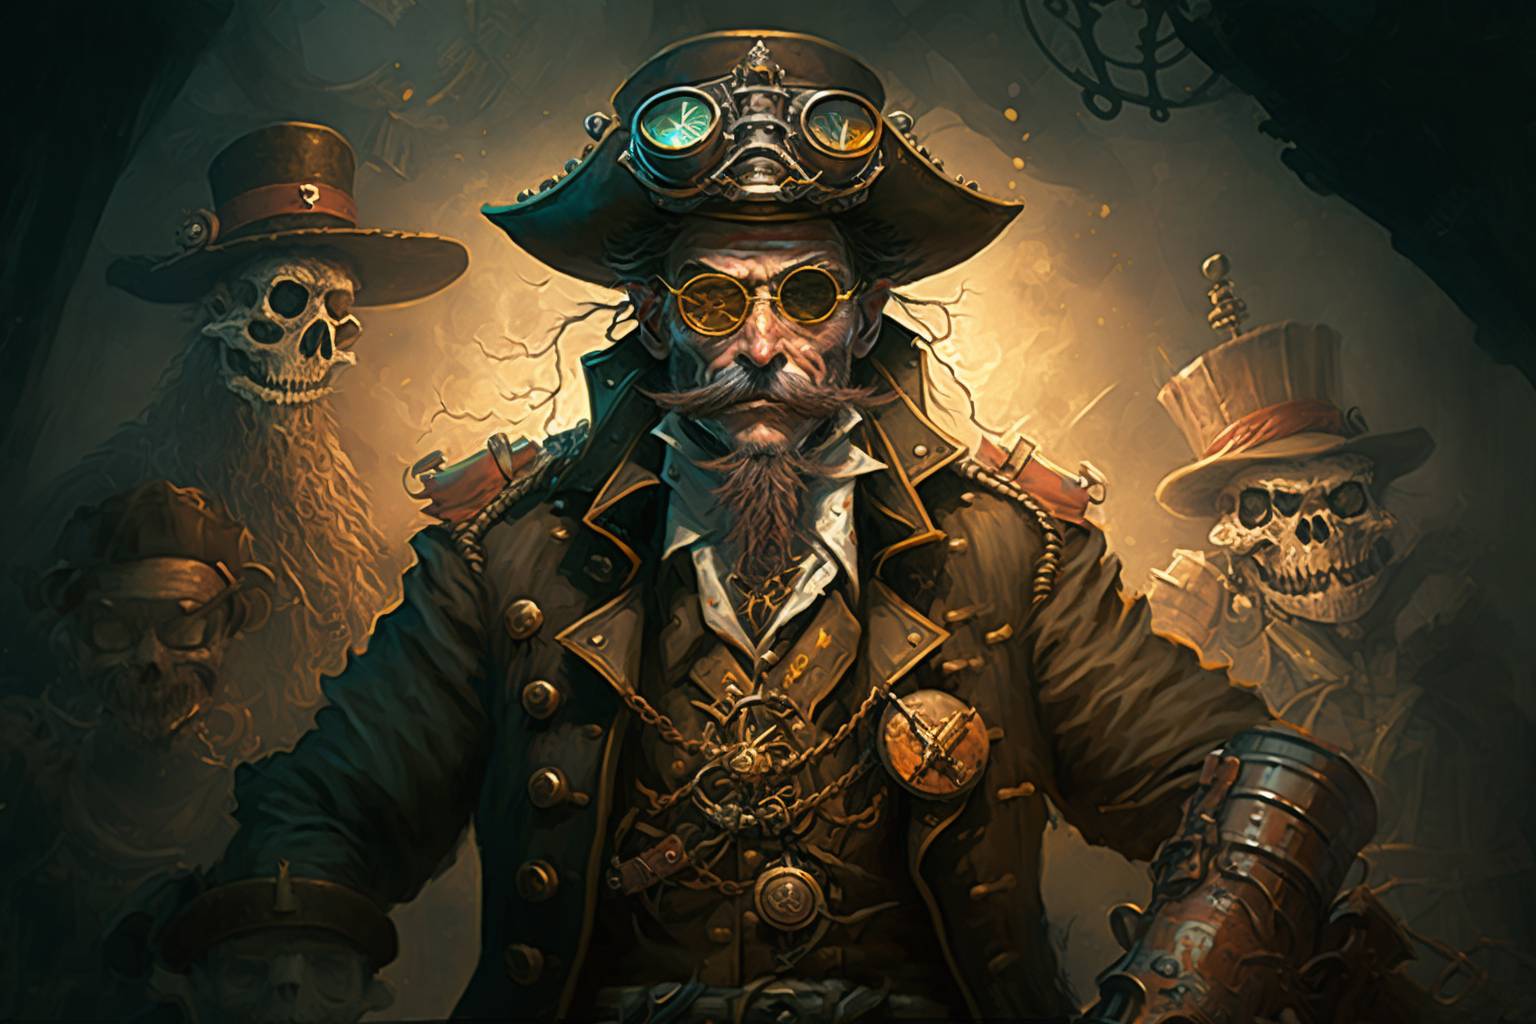 Steampunk Pirate by thomazdias32 on DeviantArt